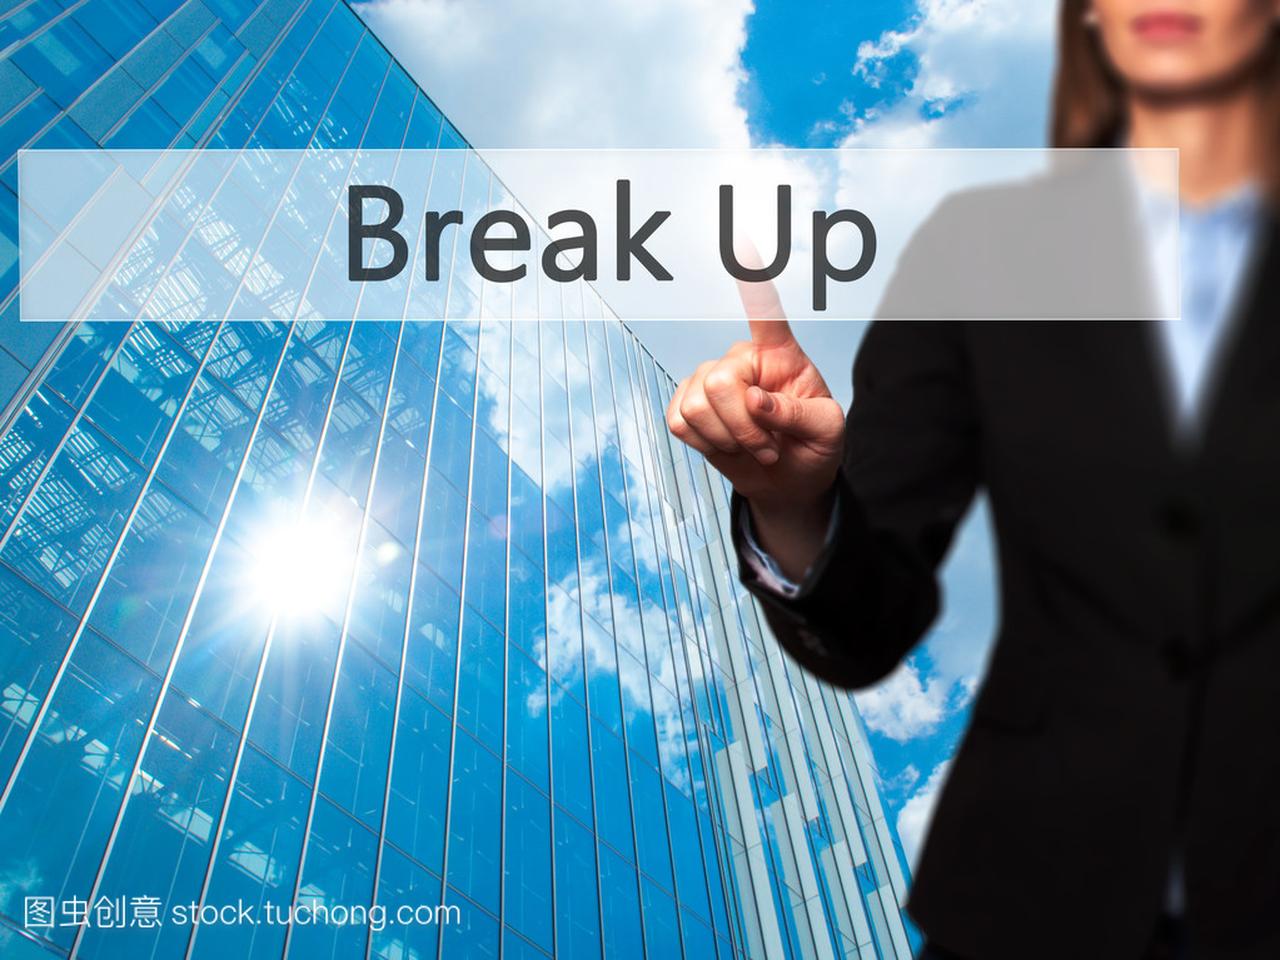 Break Up - Businesswoman pressing 